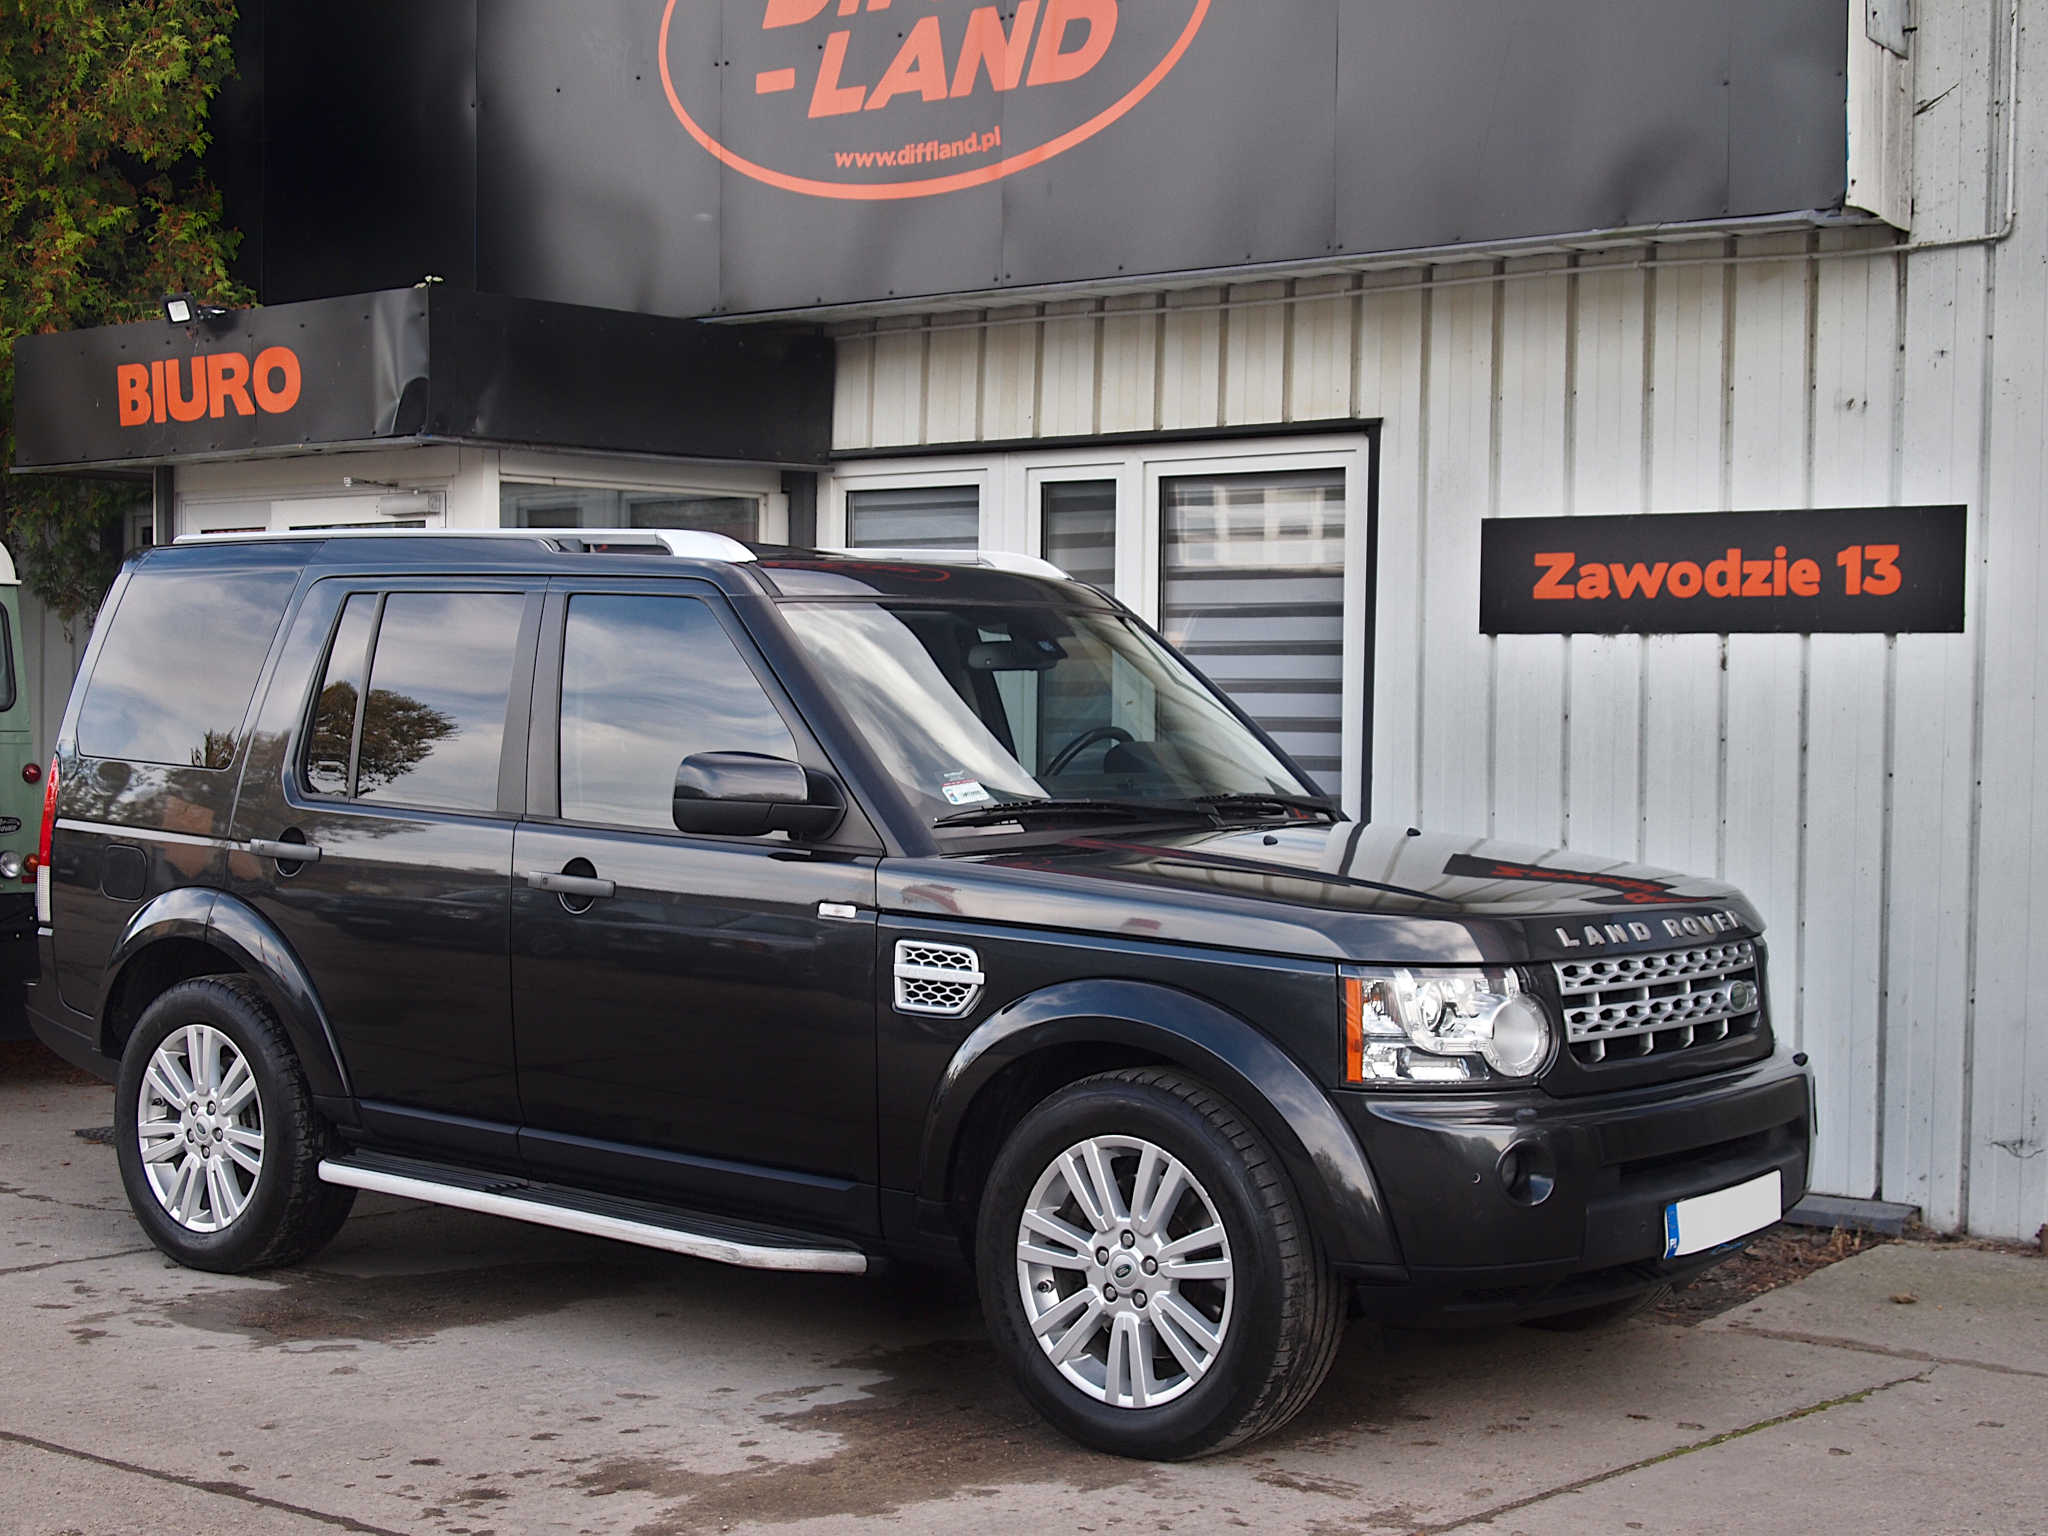 Land Rover Discovery IV 2013 5L V8 diffland.pl Serwis